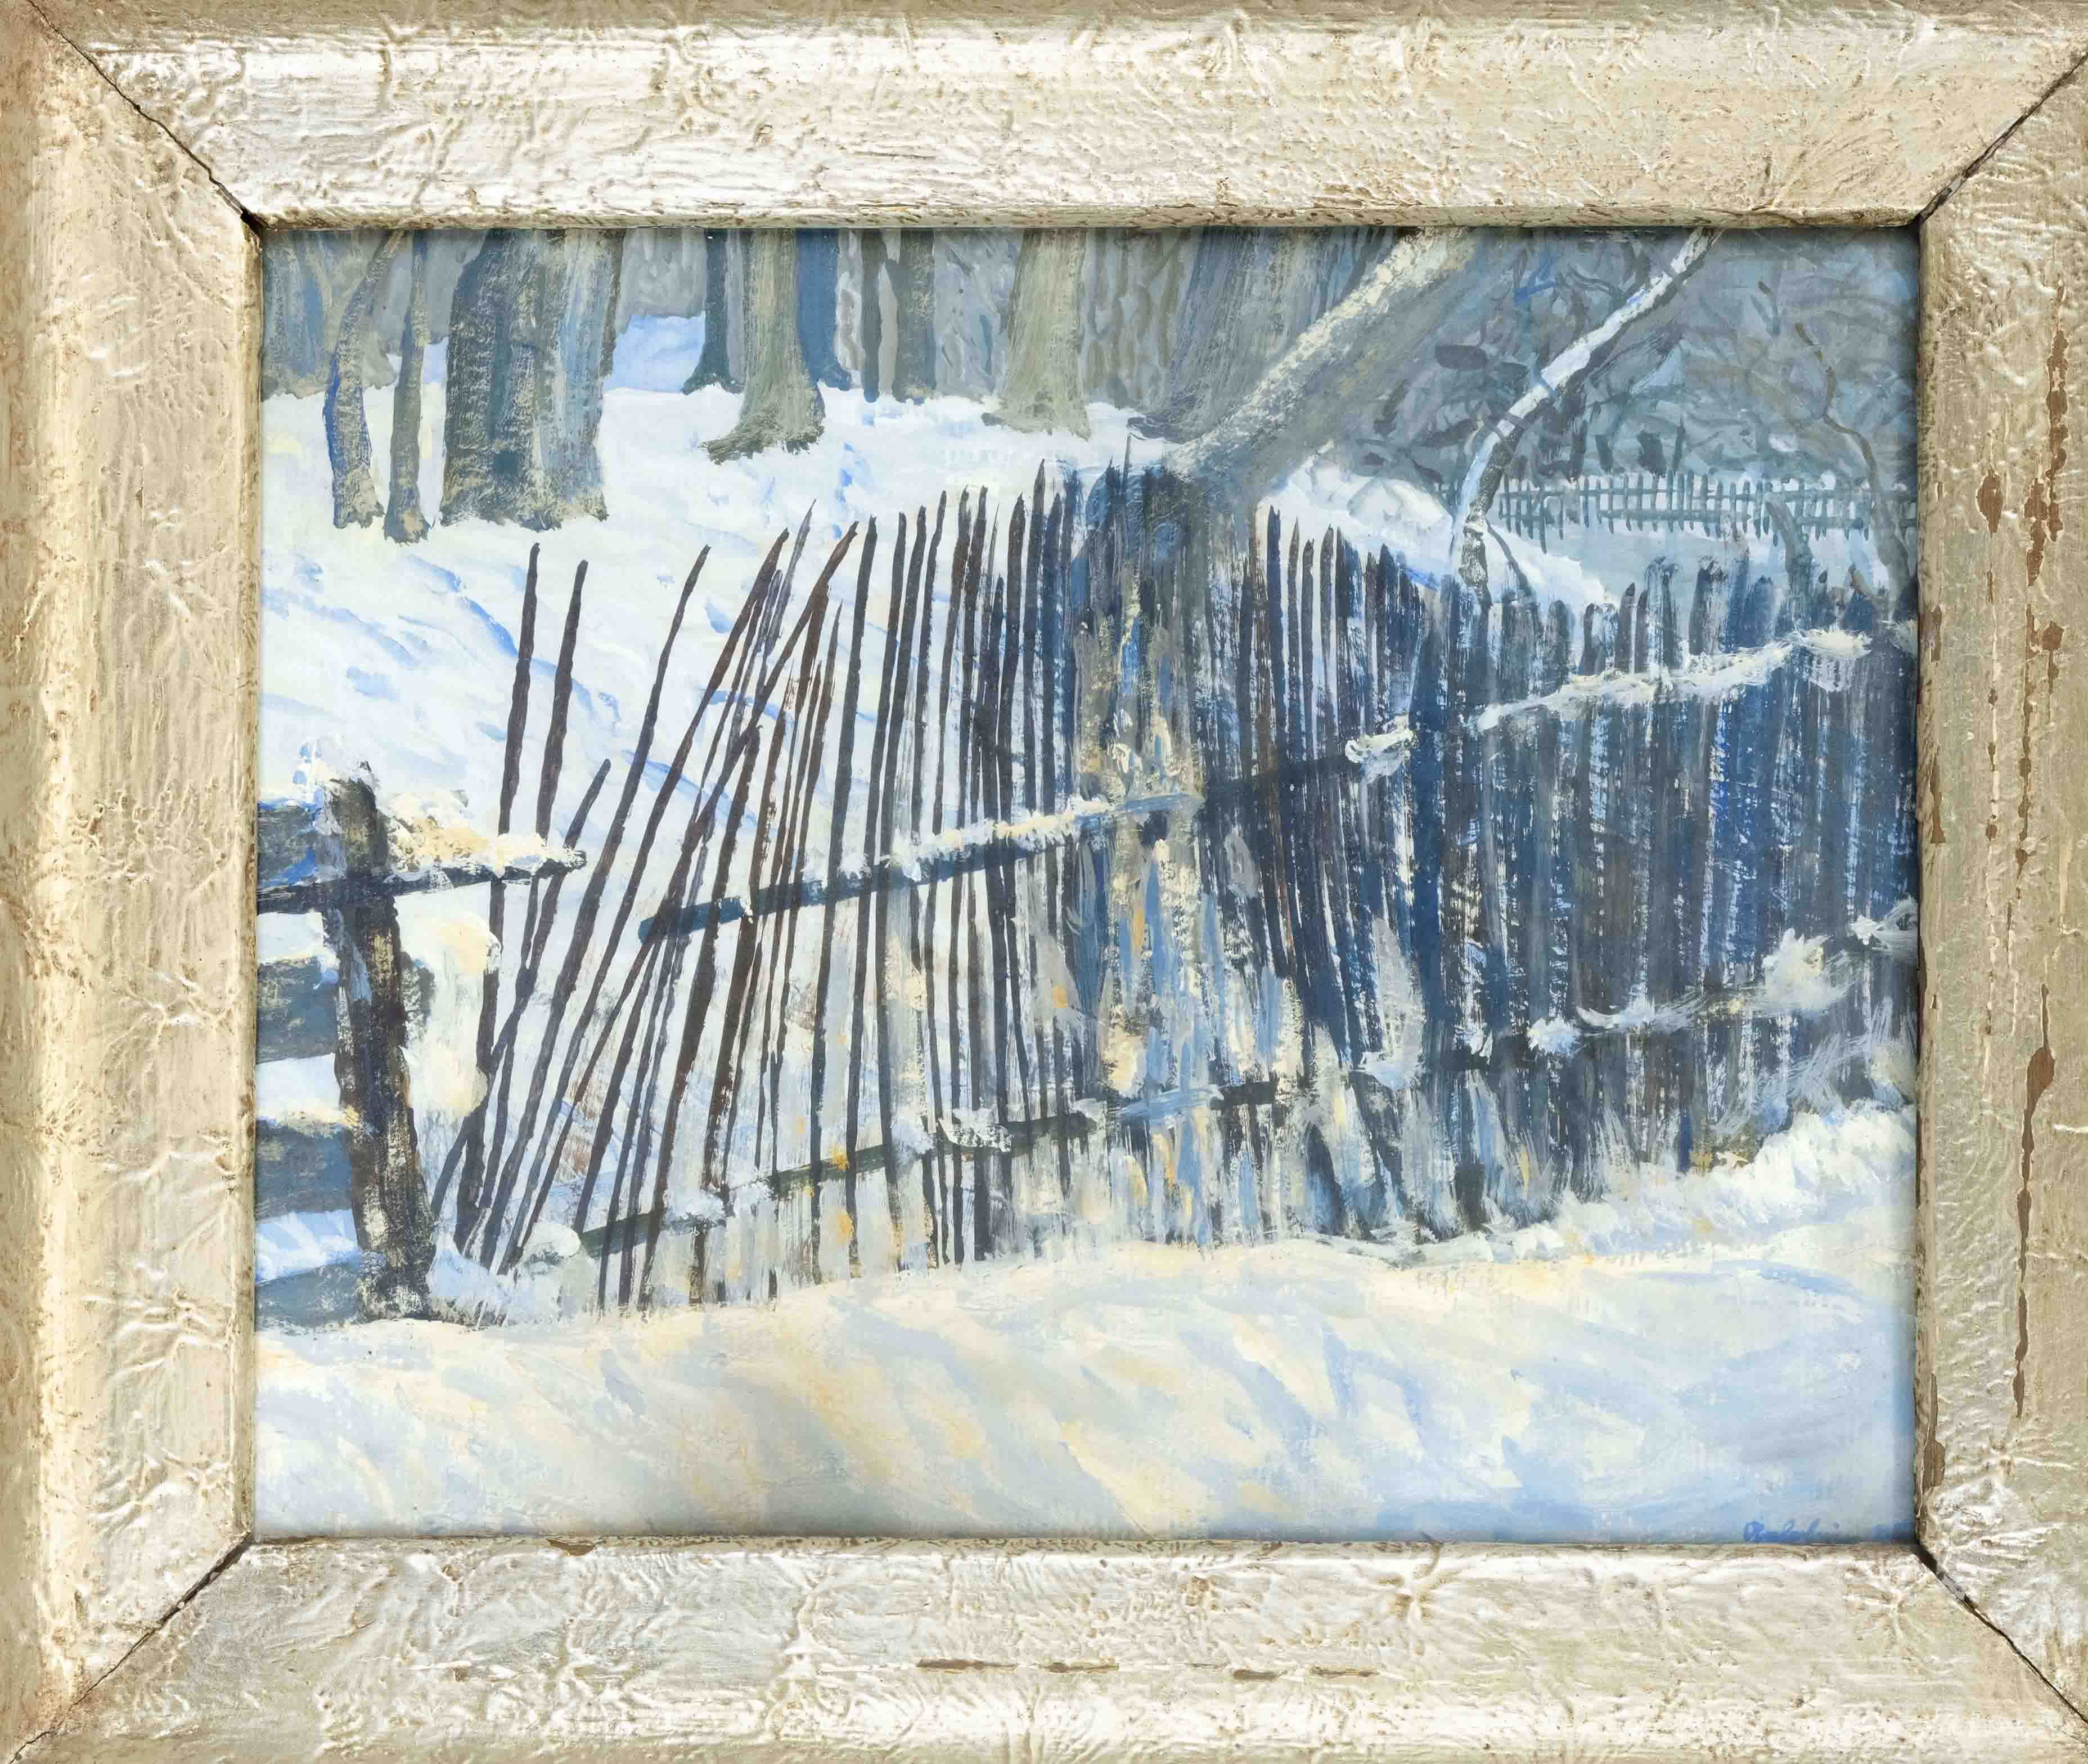 signed Gebelein, German painter c. 1925, fence in winter landscape, oil on cardboard, signed lower